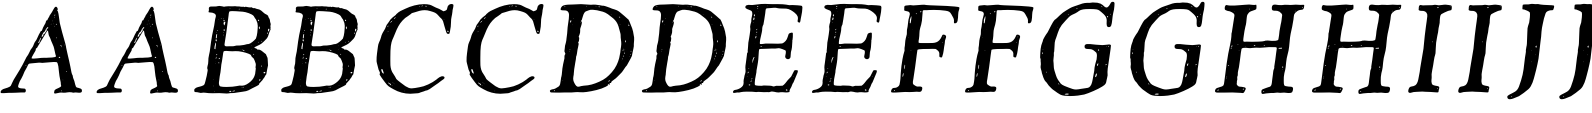 Versica Serif Oblique Tracked